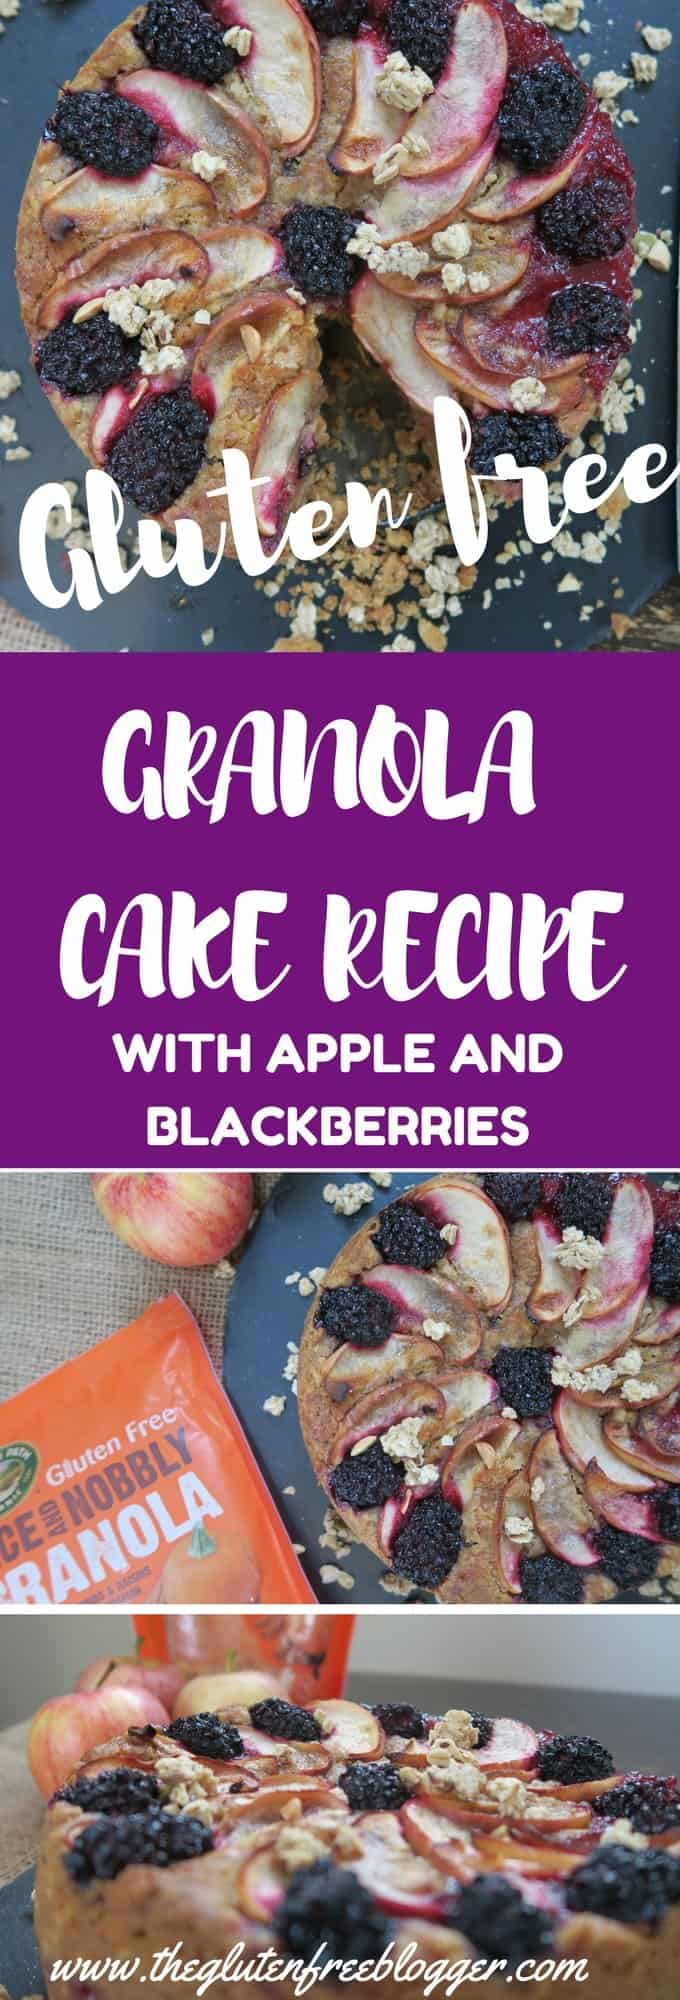 Gluten free granola cake recipe with apple and blackberries - autumn recipes - egg free - www.theglutenfreeblogger.com (1)